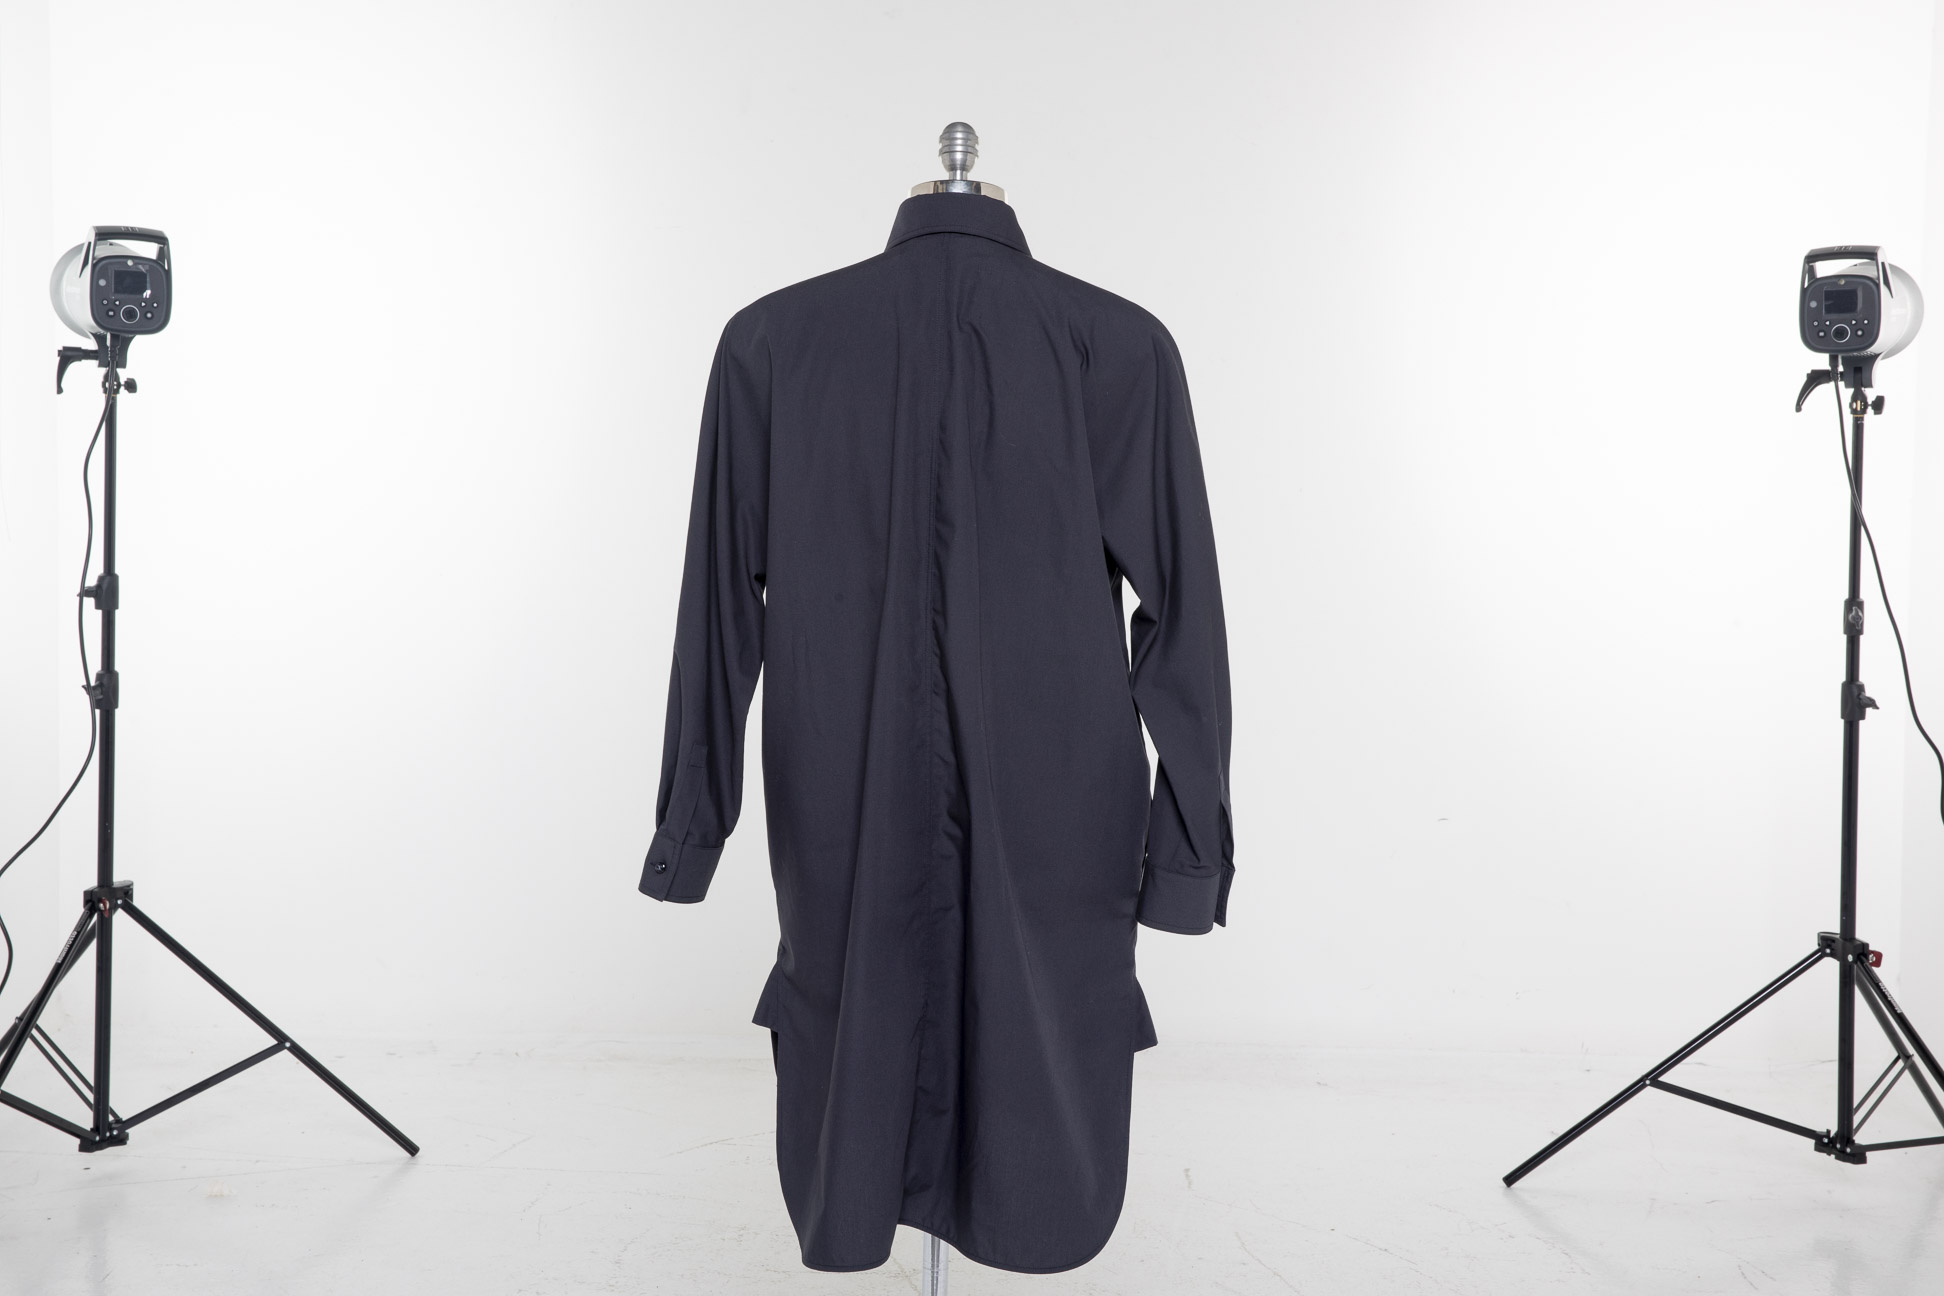 A MAX MARA 'SPEZIE' BLACK RUFFLED SHIRT DRESS - Image 3 of 3